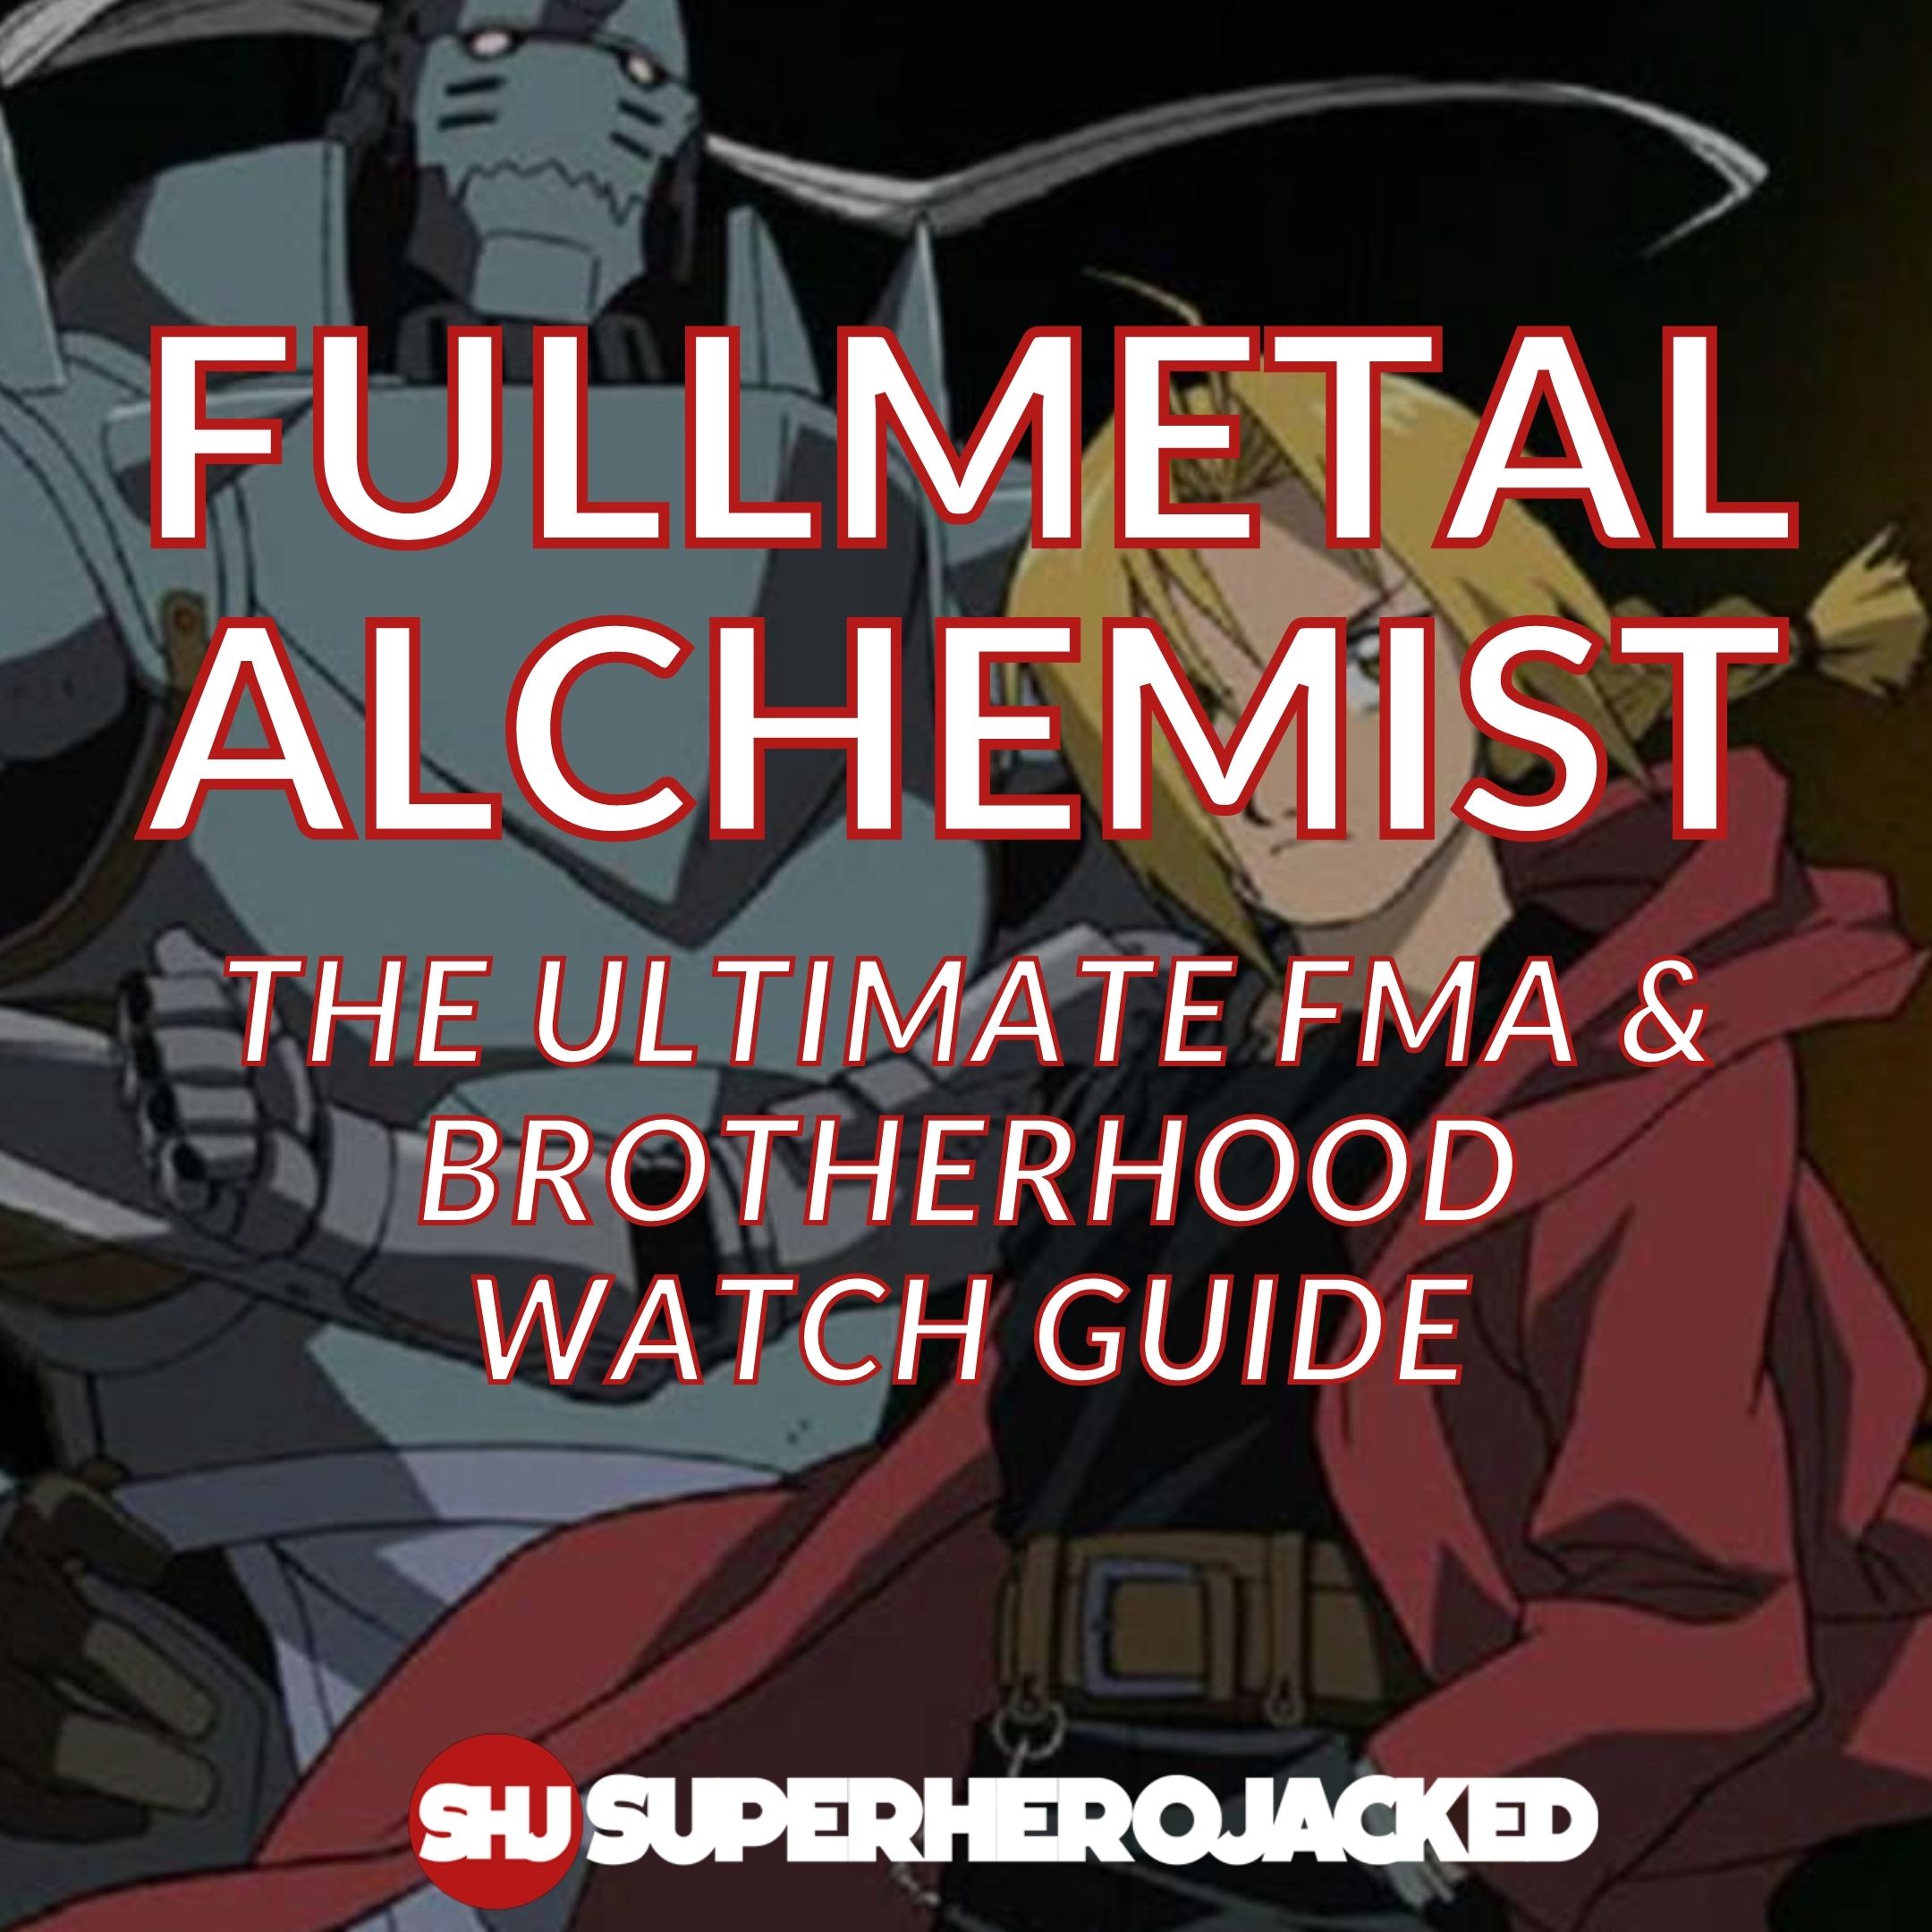 Fullmetal Alchemist & FMA Brotherhood Filler List & Watch Guide